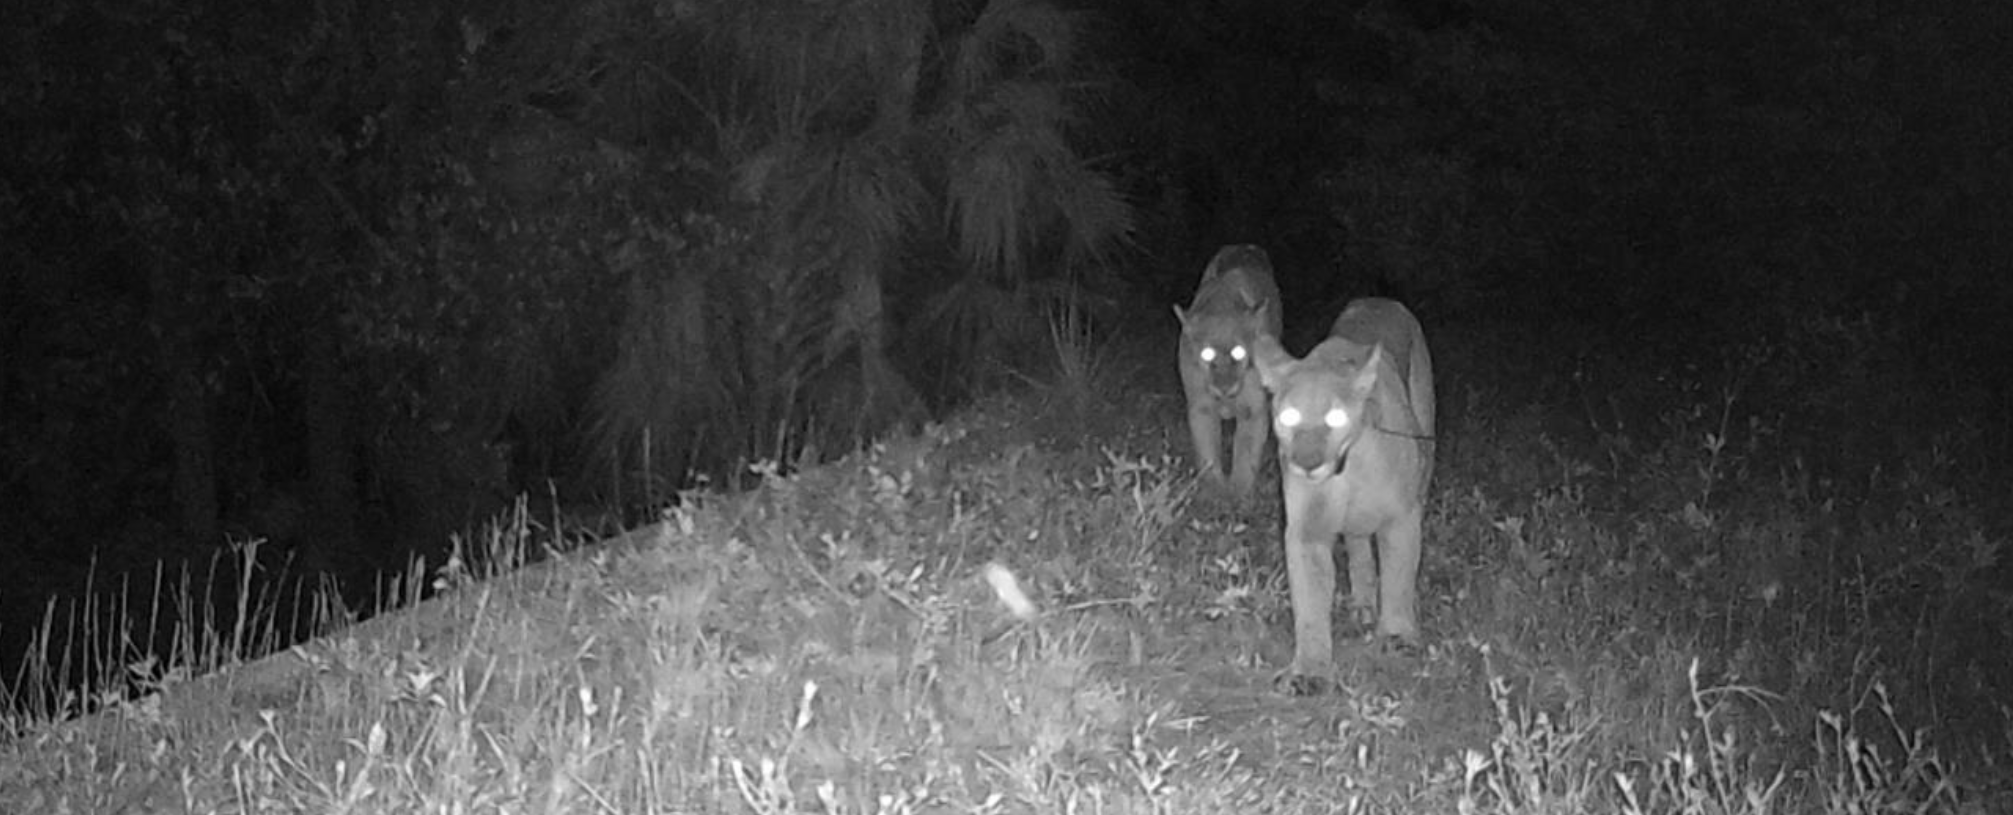 florida panthers at wildlife crossing visible under night vision